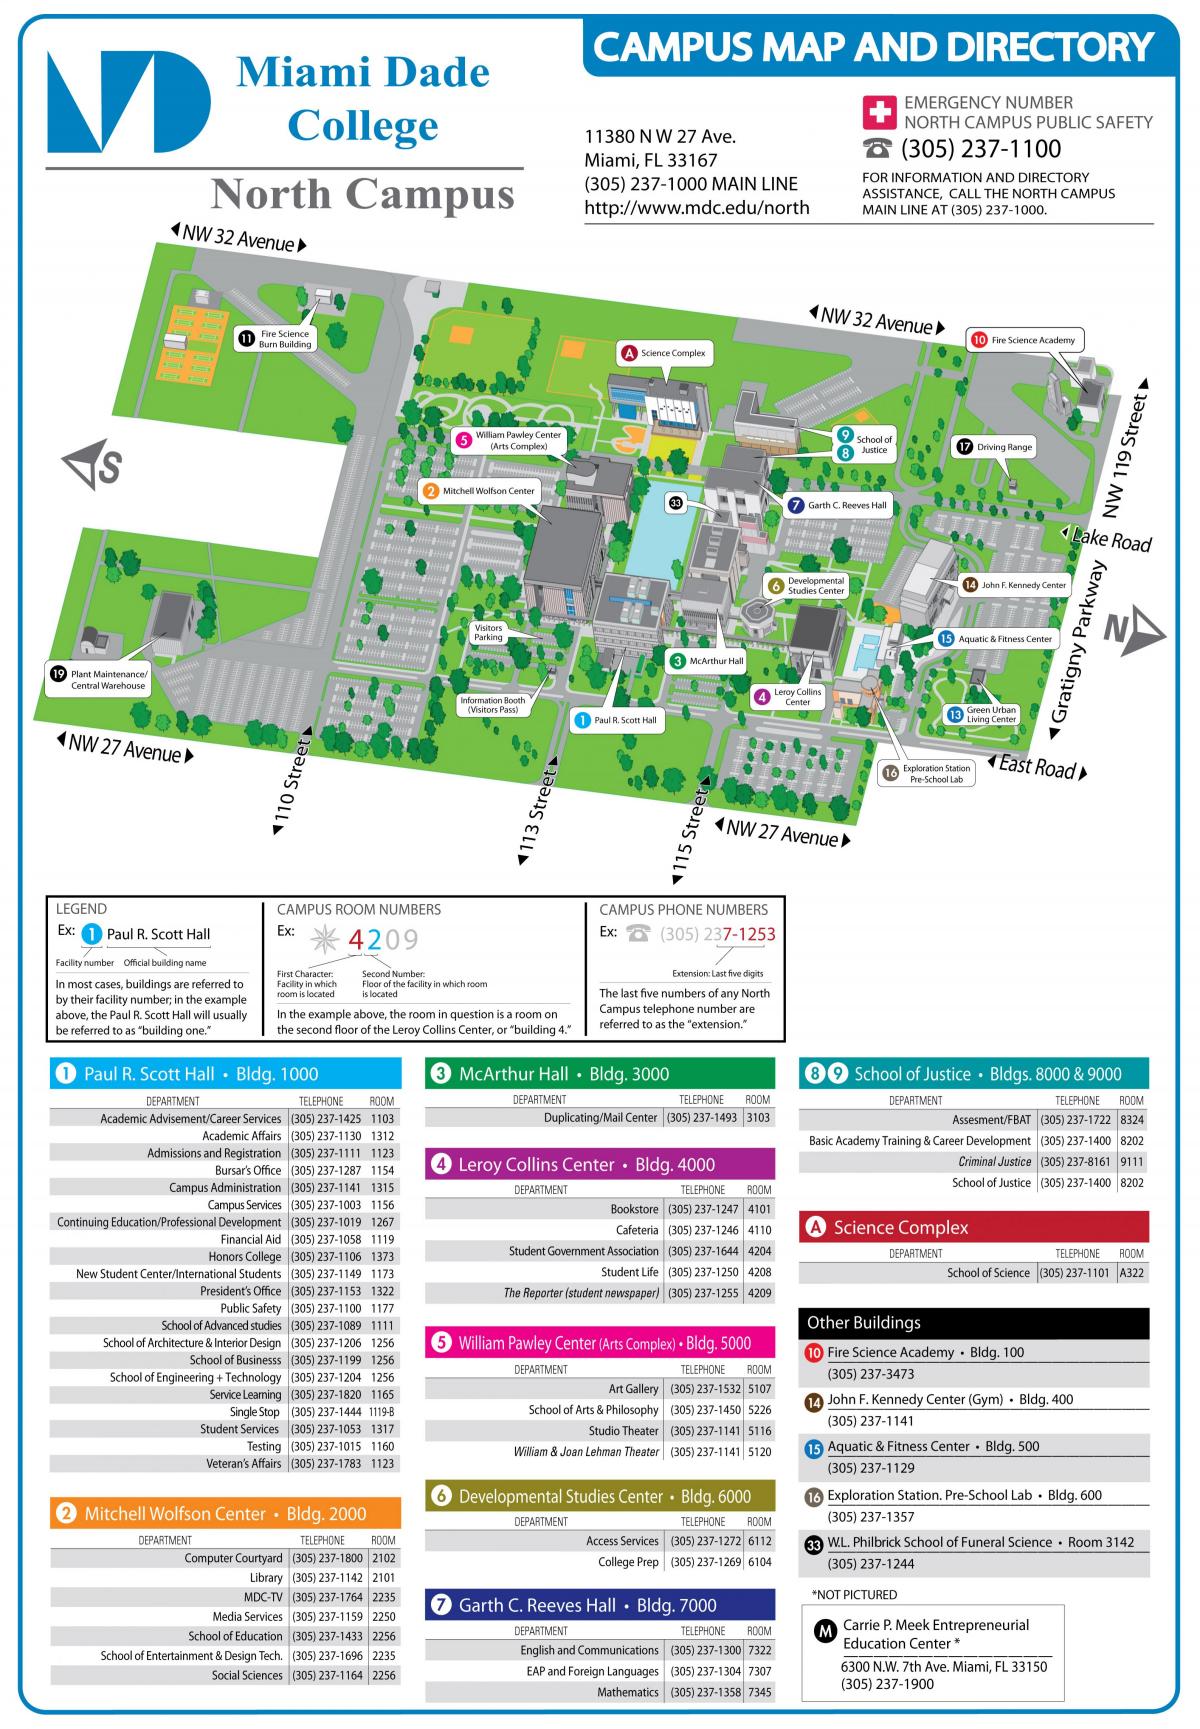 Miami Dade college north campus map